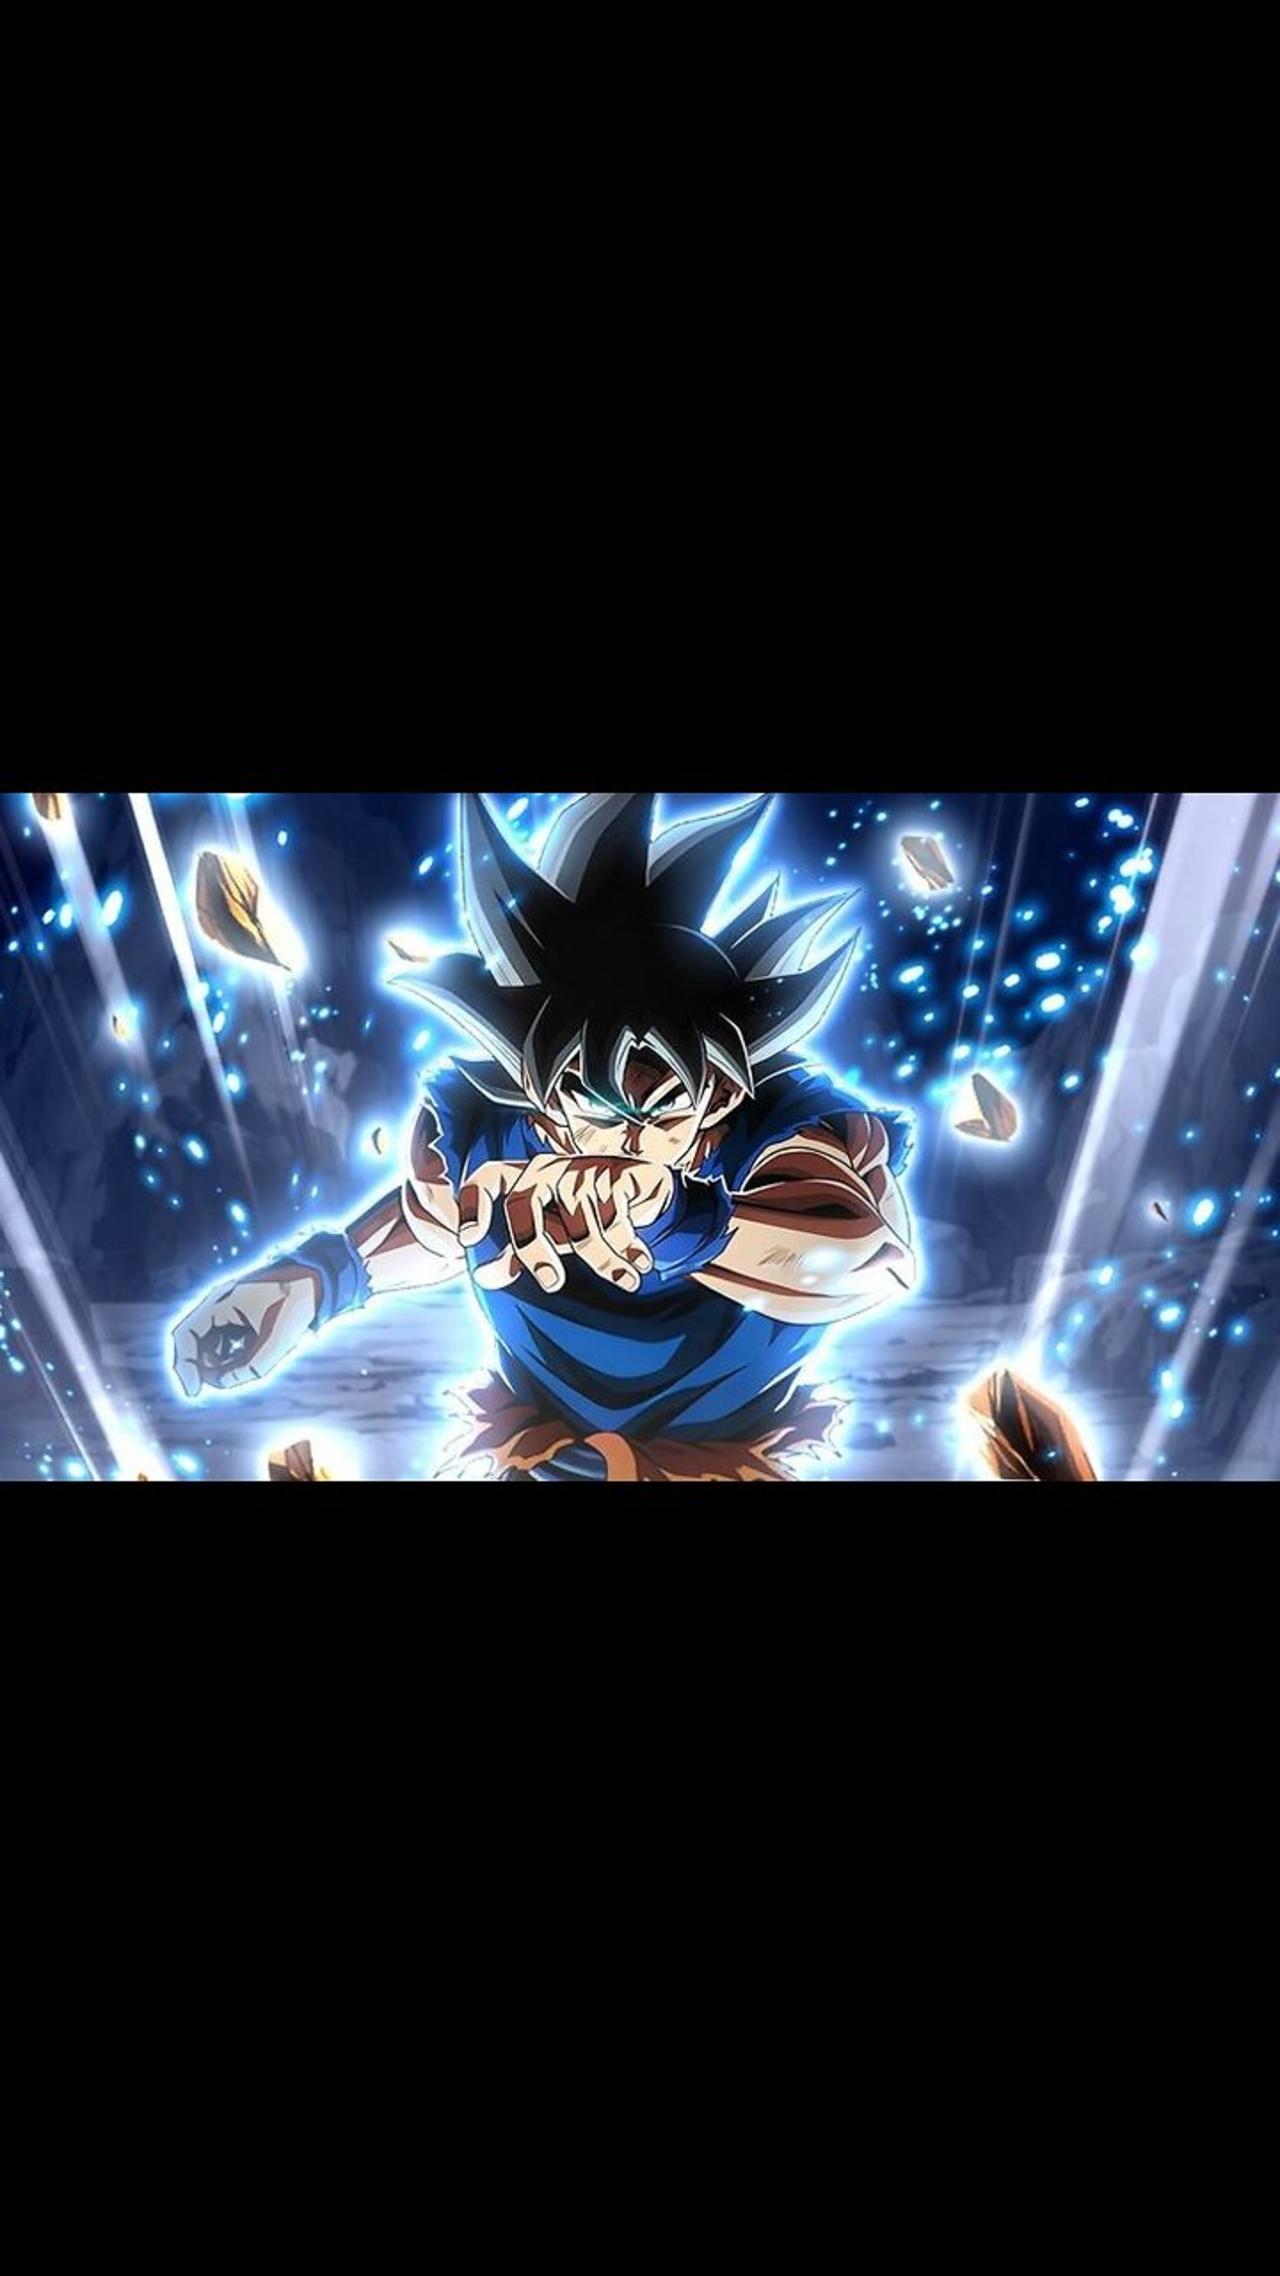 Battle of Saiyan Titans: Goku vs. Vegeta - Clash of Ultimate Power